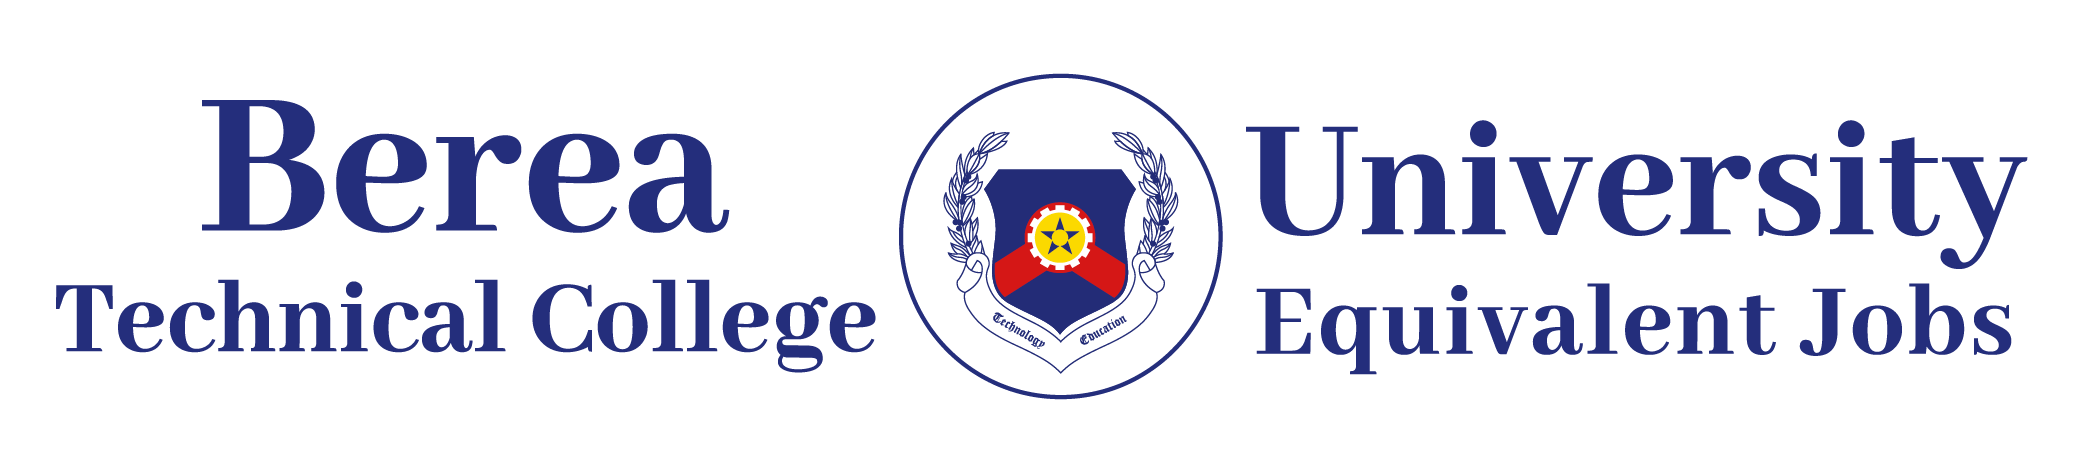 Berea Technical College Logo